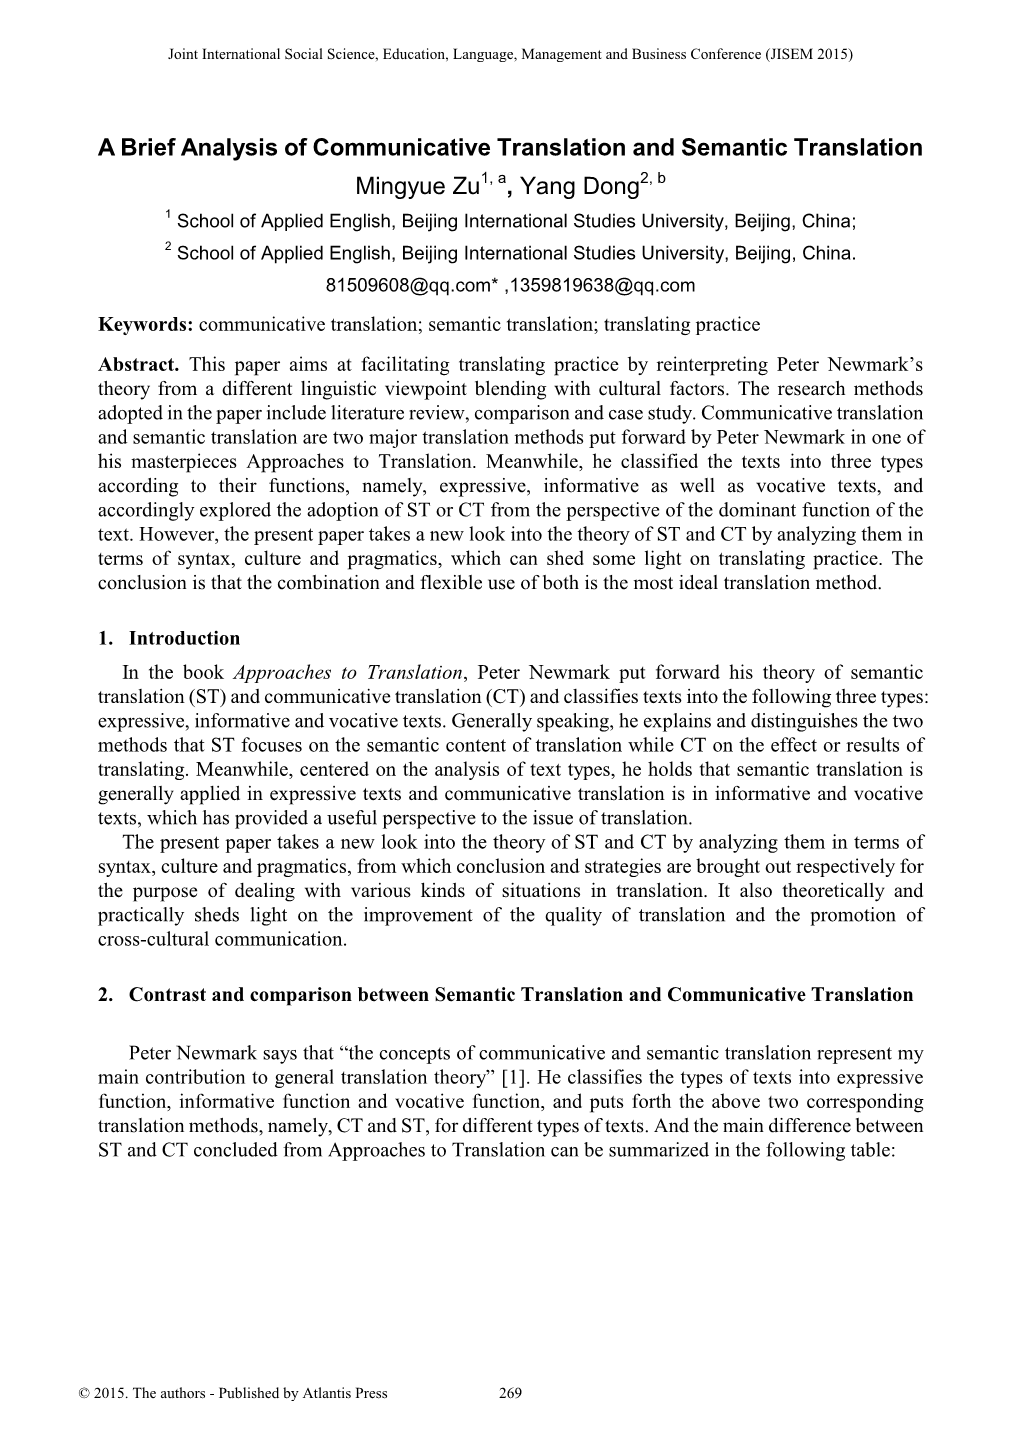 A Brief Analysis of Communicative Translation and Semantic Translation Mingyue Zu